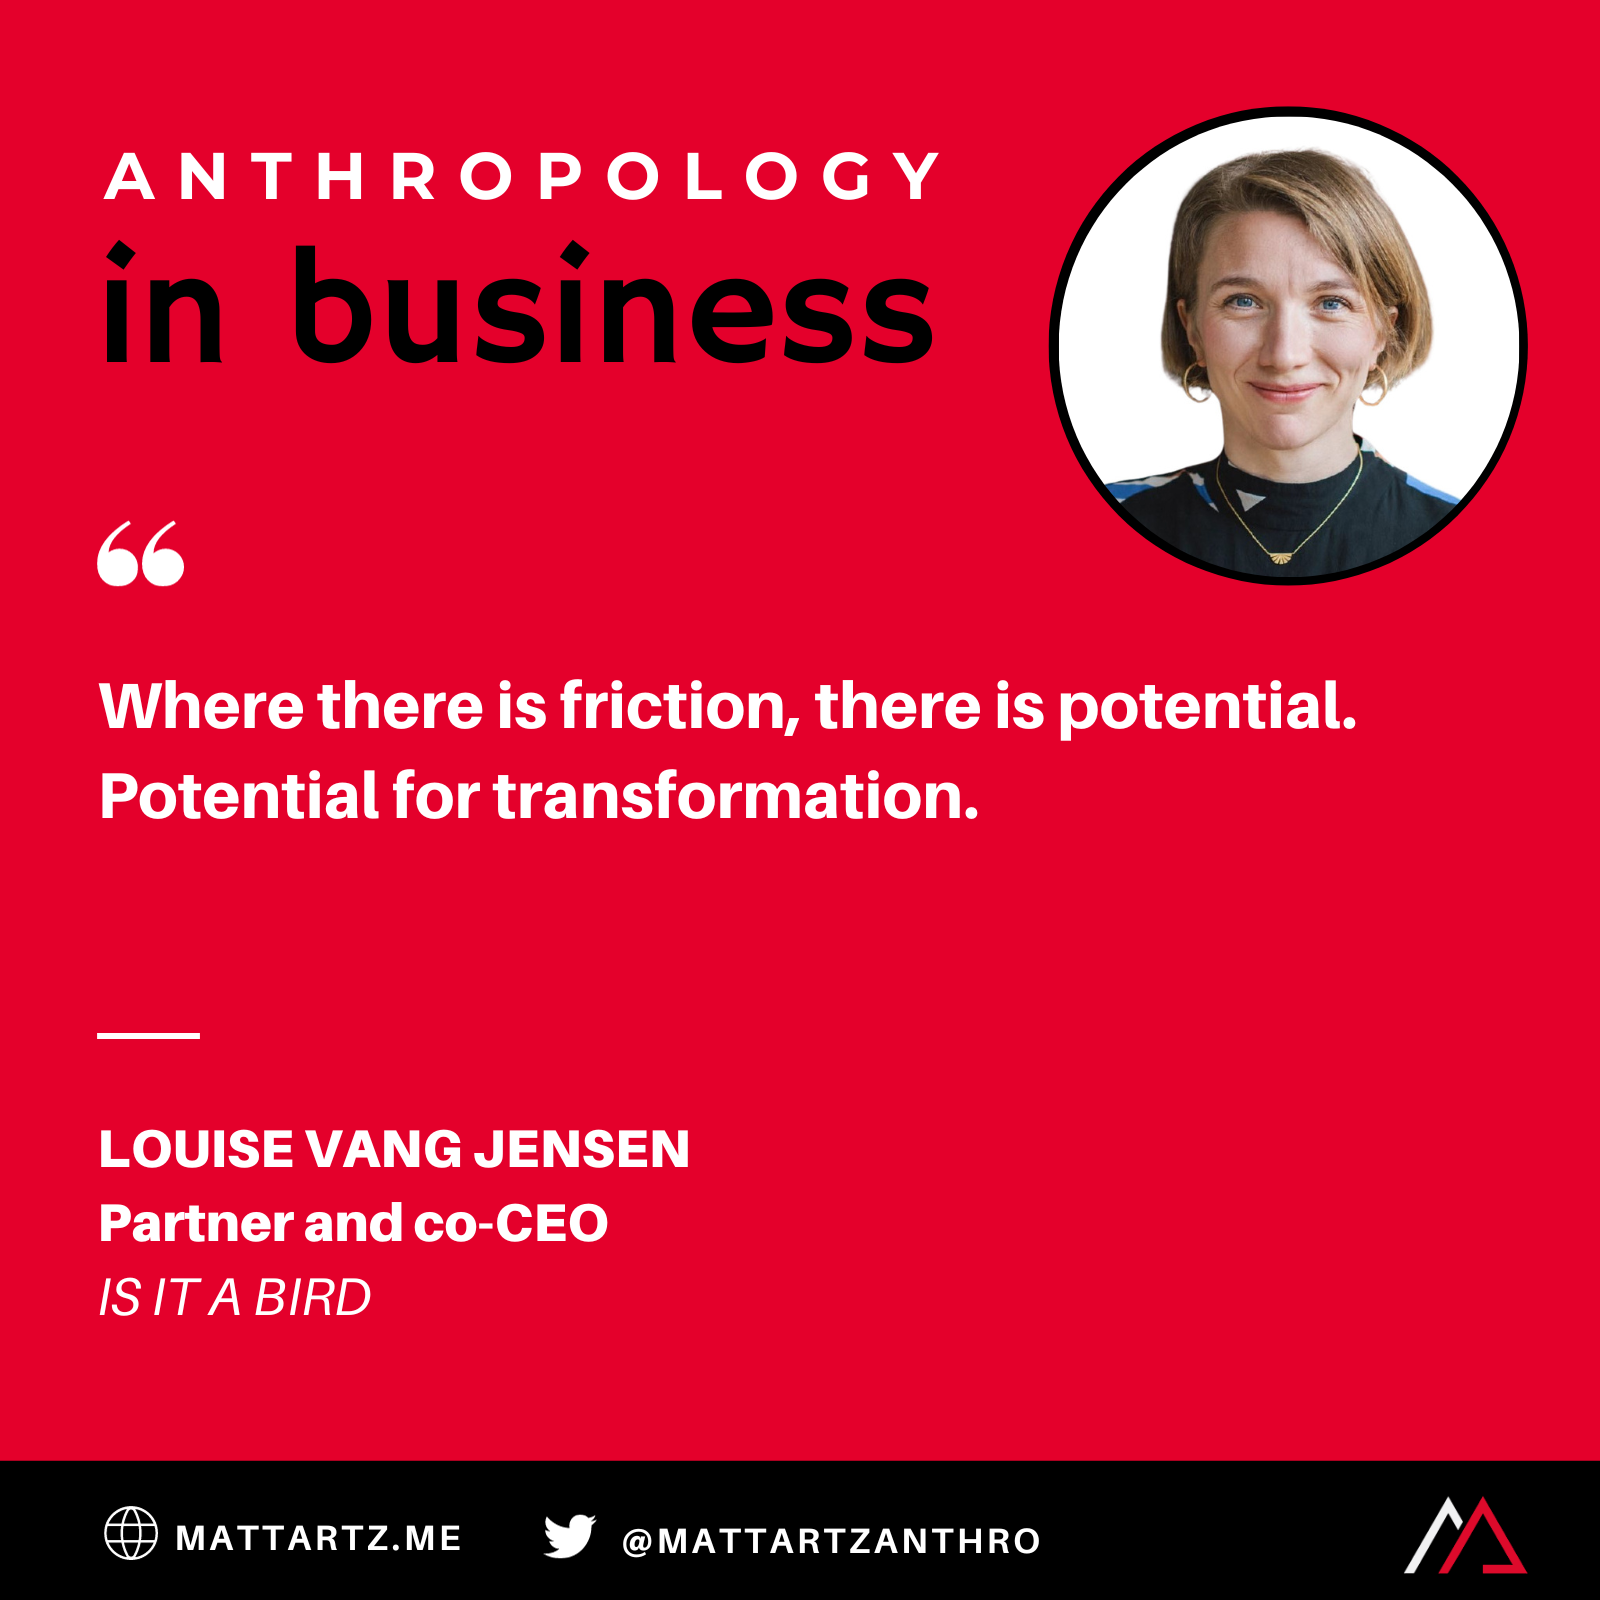 Louise Vang Jensen on Anthropology in Business with Matt Artz